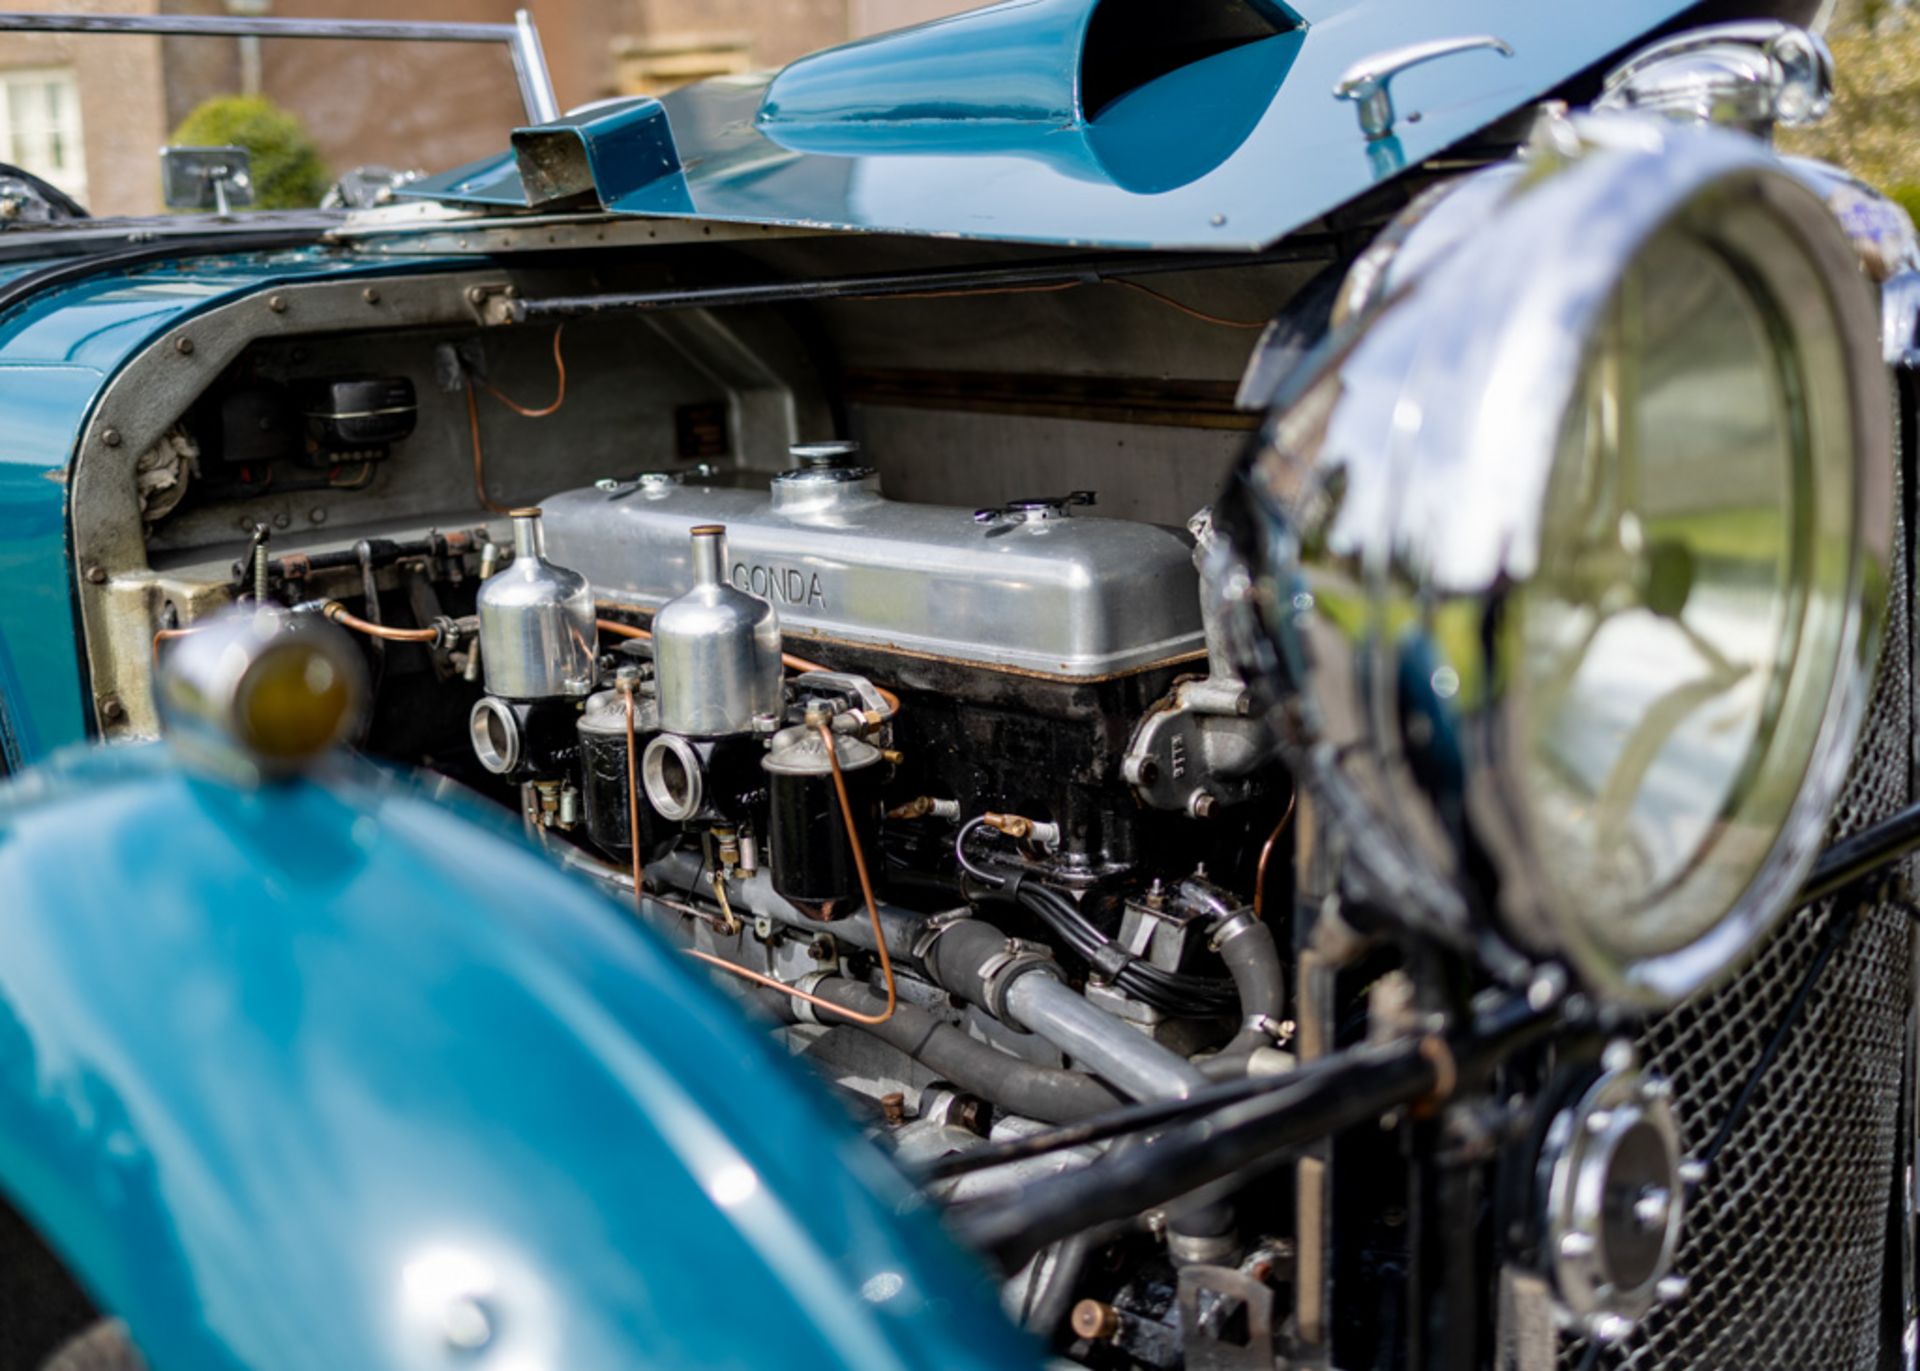 1936 Lagonda LG45 Fox & Nicholl Le Mans Team Car Replica (4½ litre) - Image 28 of 37